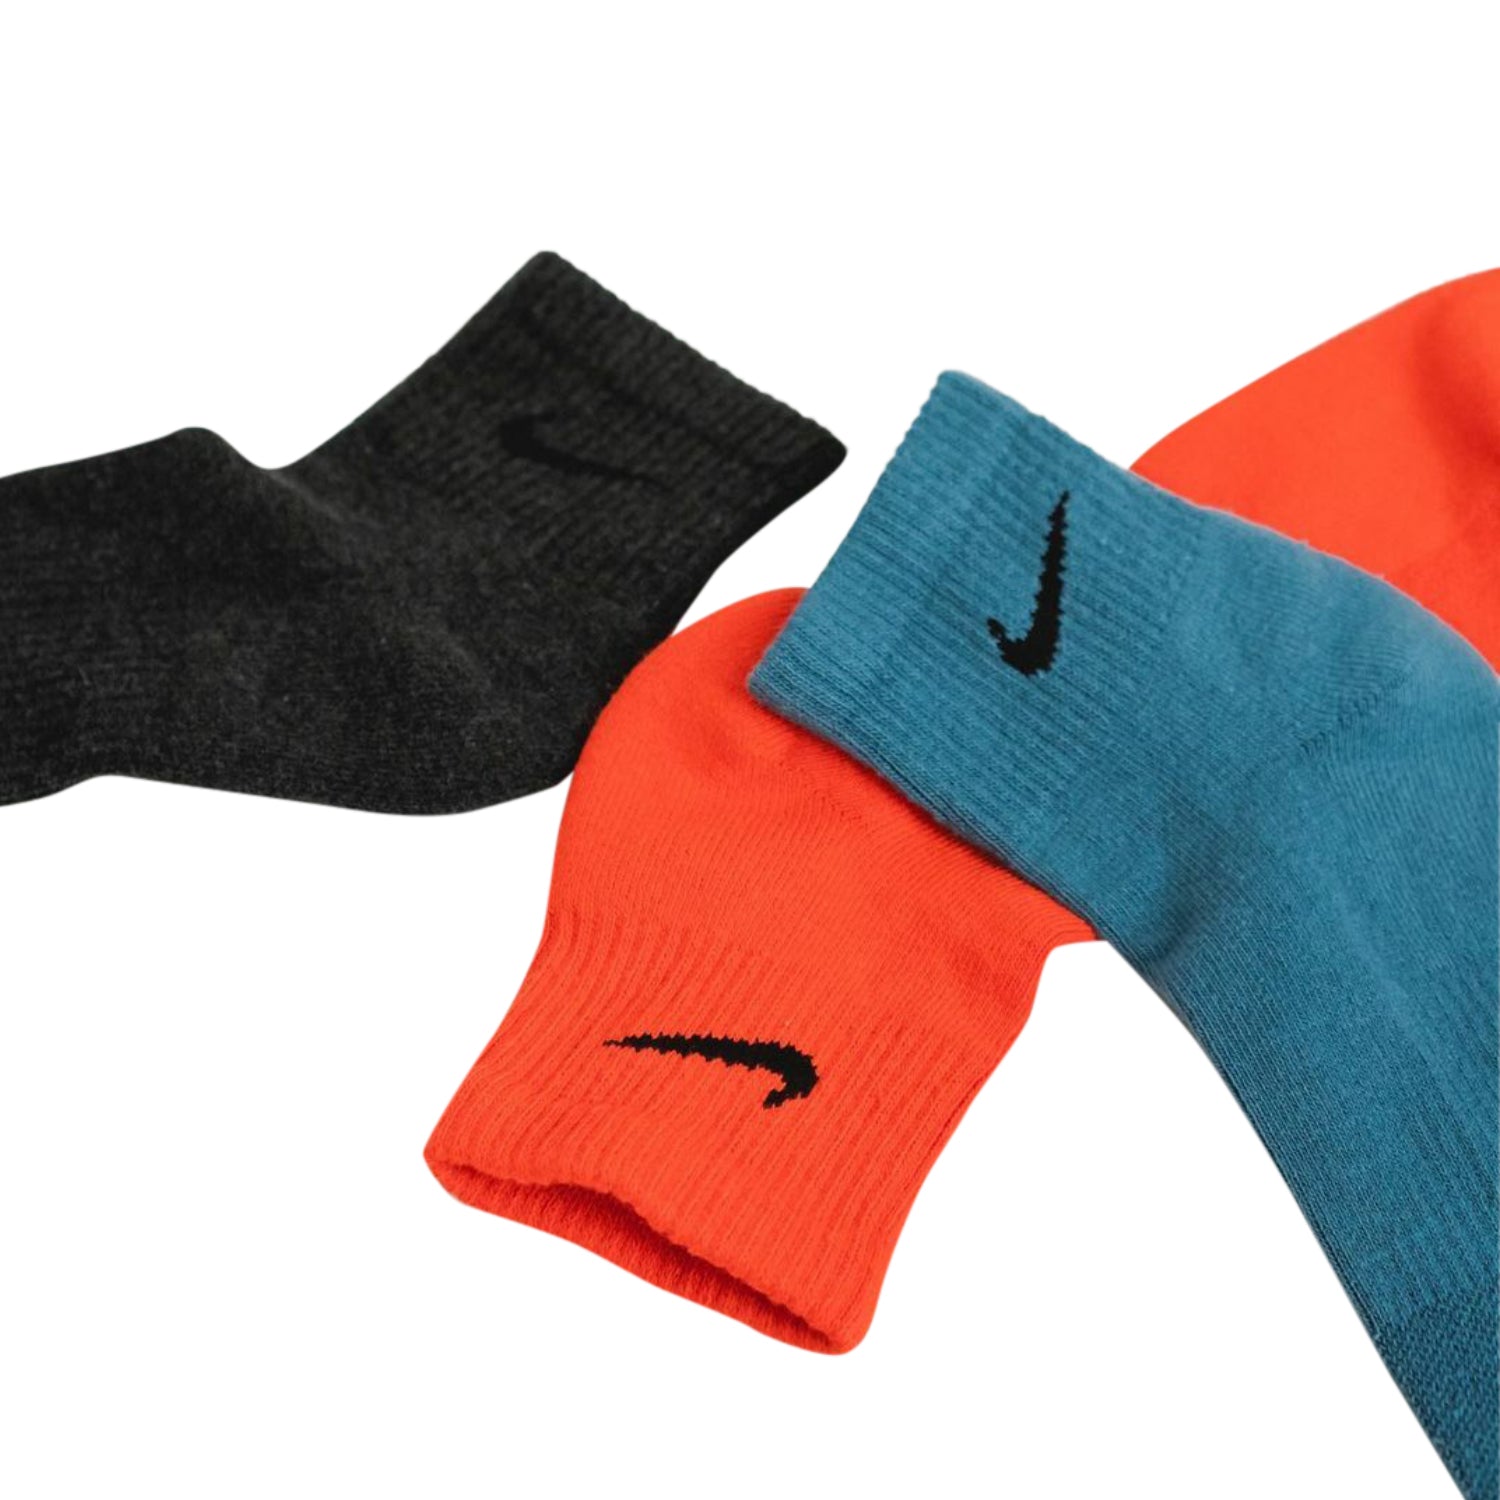 Nike  22 Everyday Plus Cushioned Training Ankle Socks (3 Pairs) Mens Style : Sx6890    2022